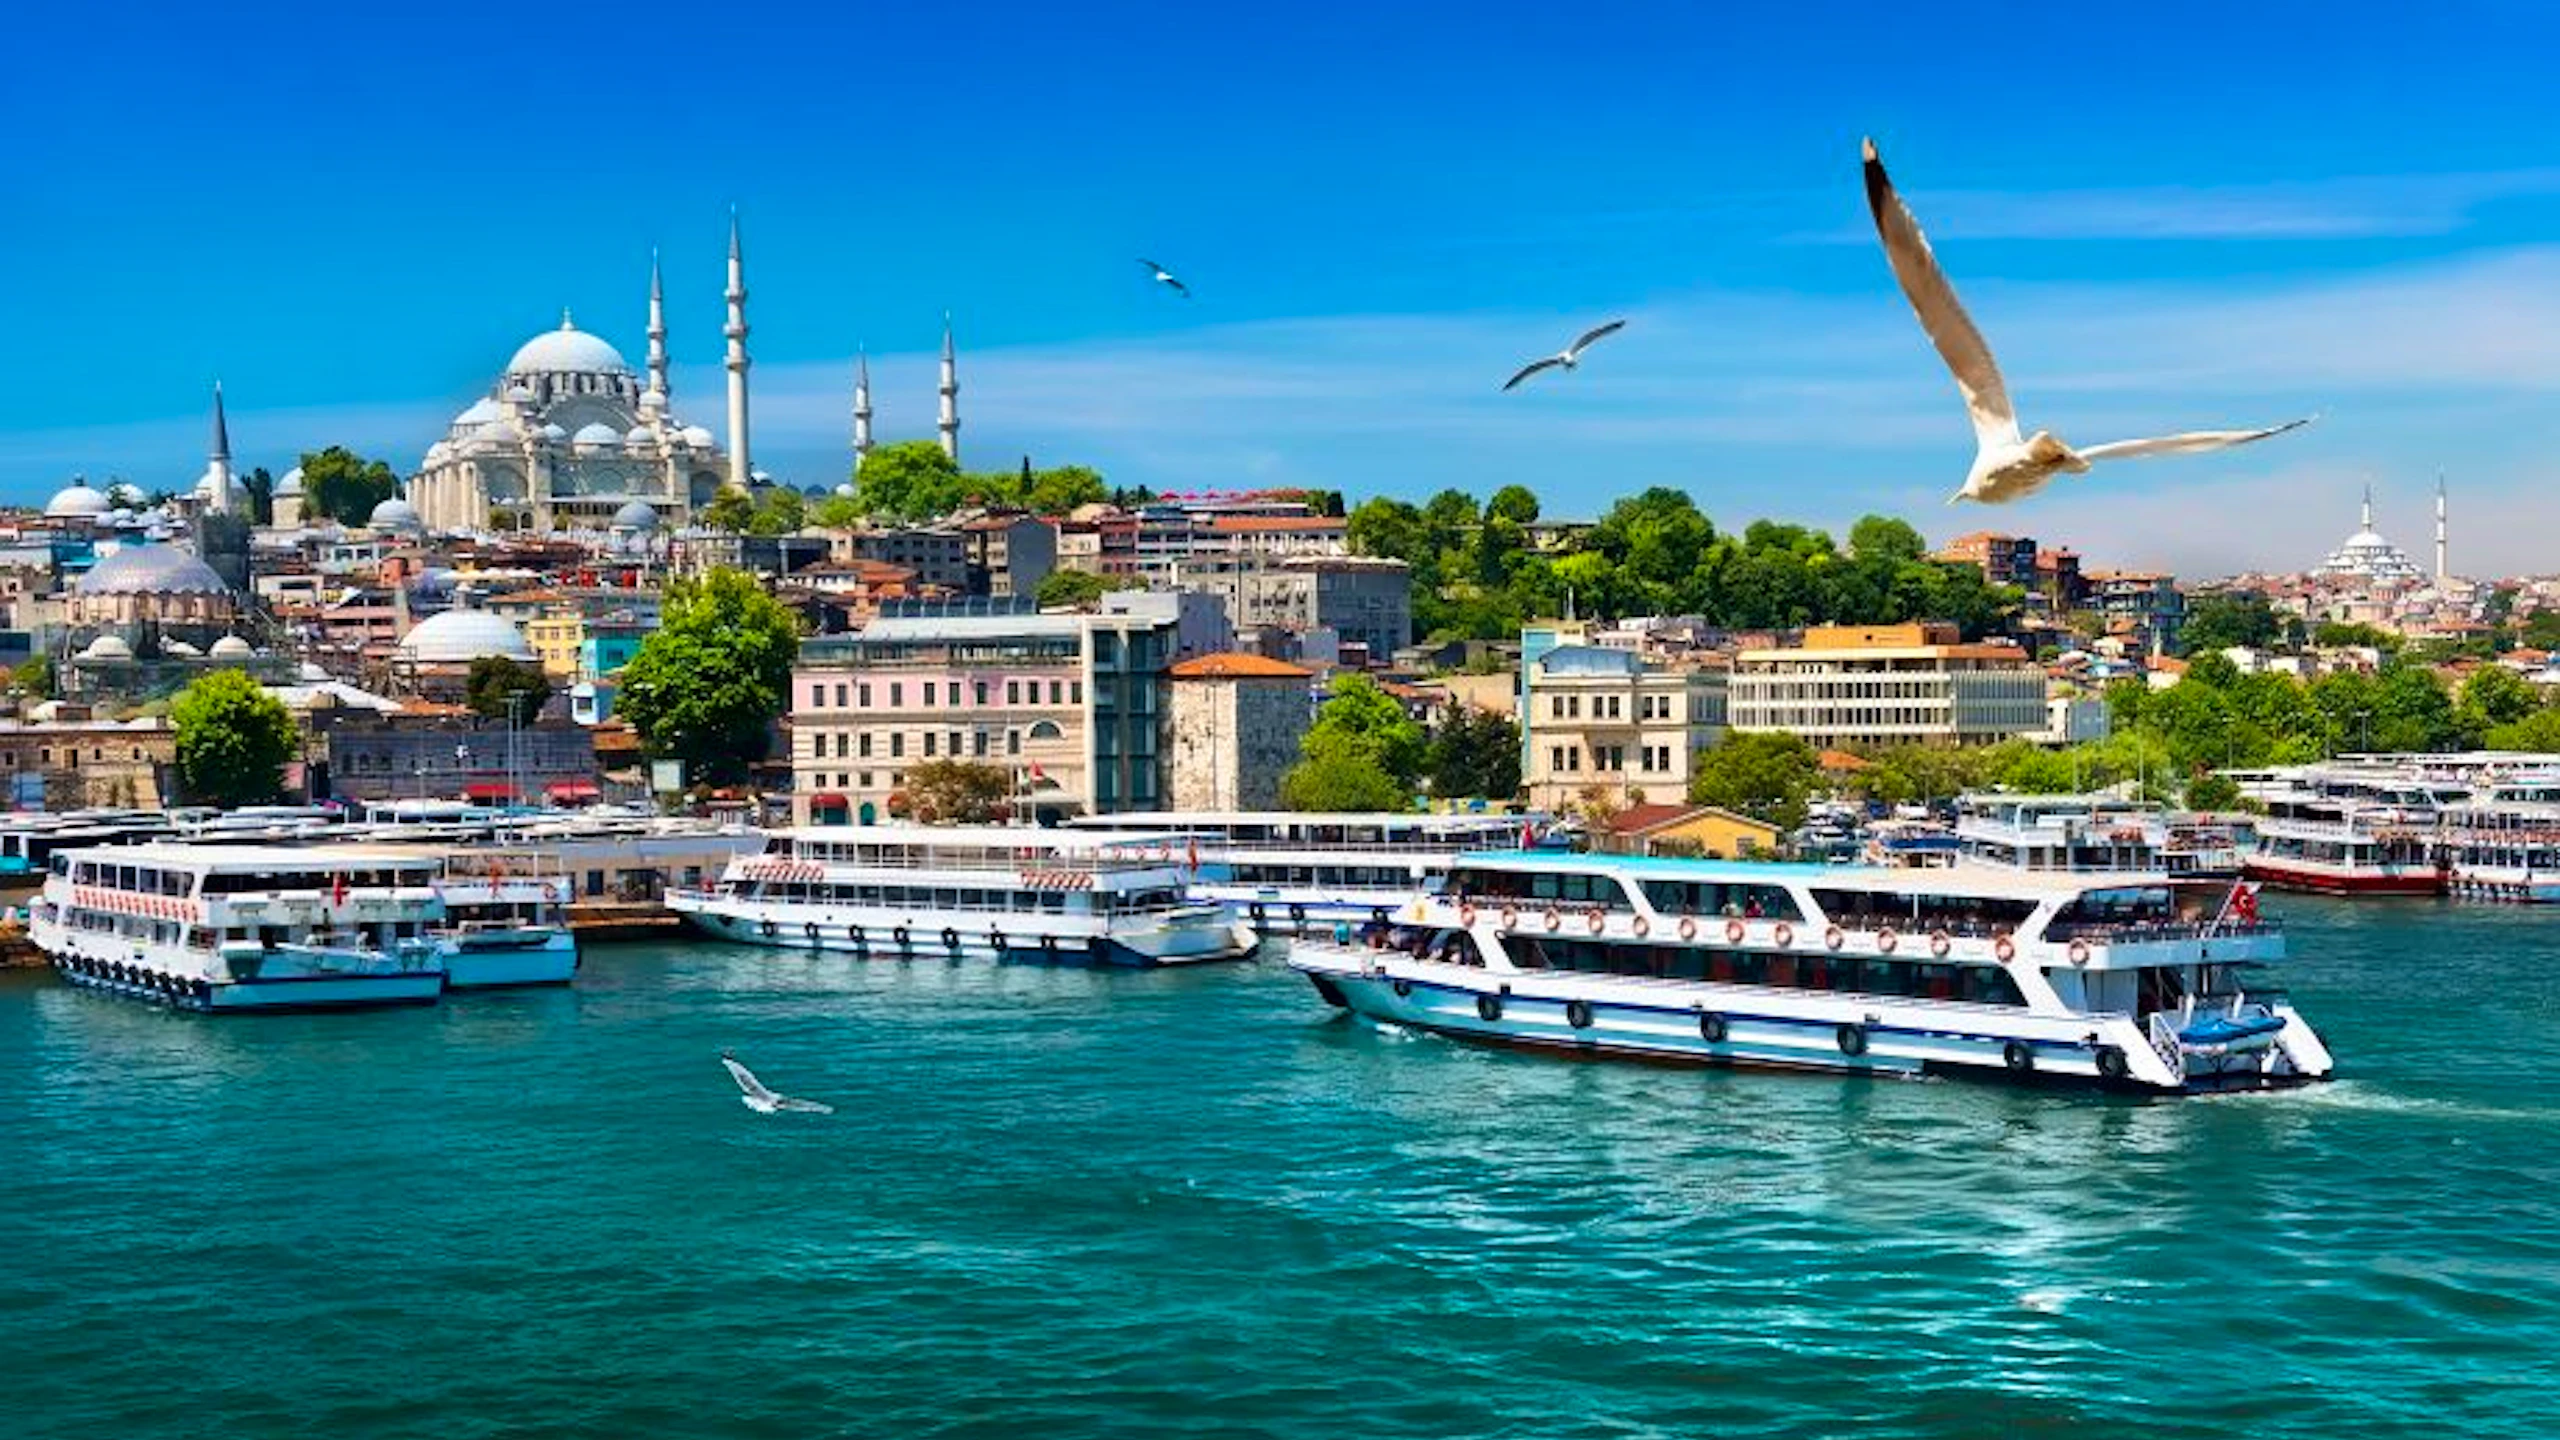 Bosphorus Cruise with Spice Bazaar Discount